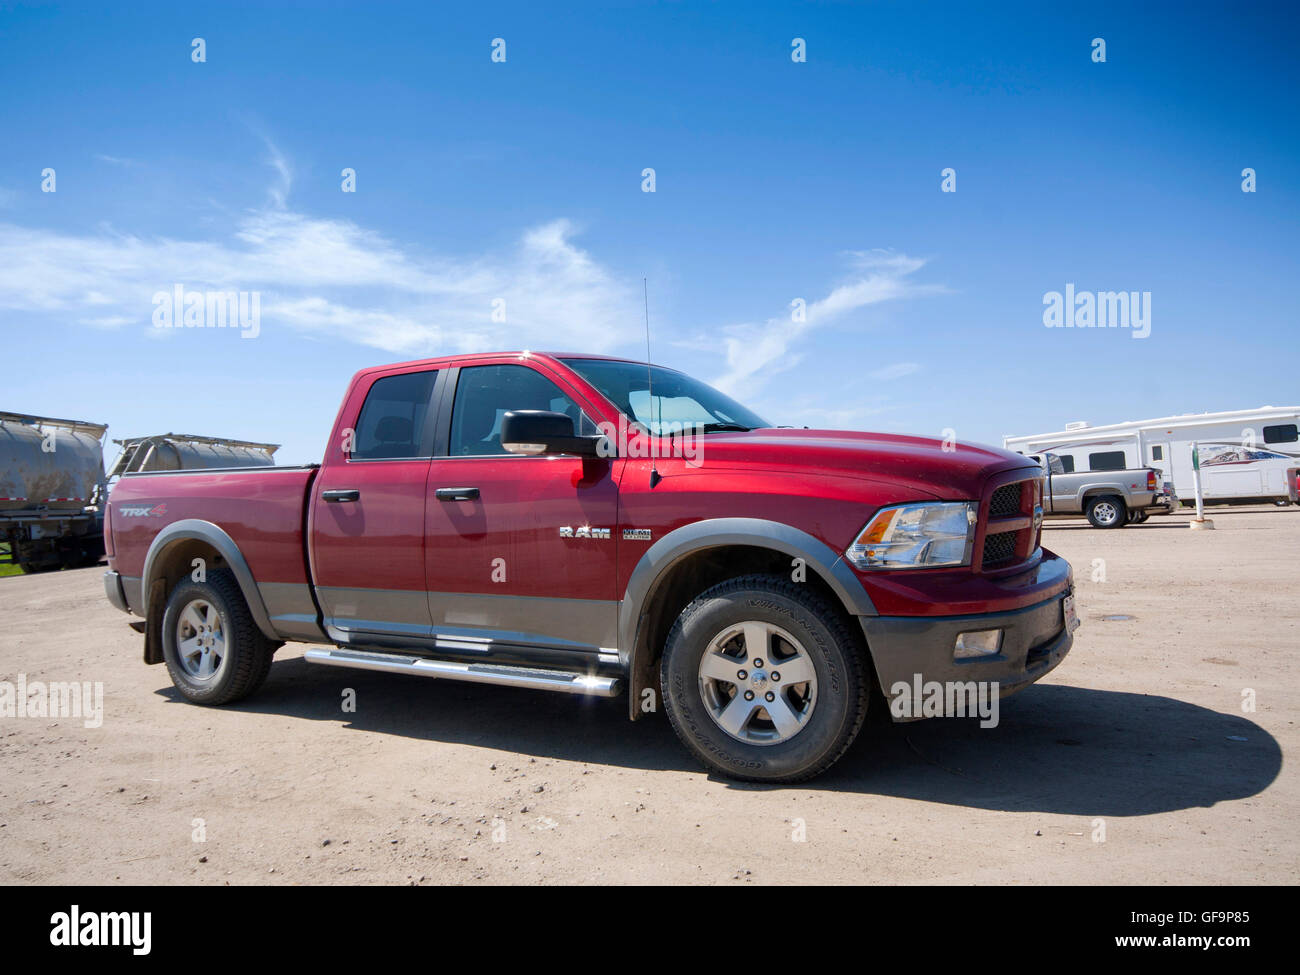 Dodge RAM Hemi 5.7 liter pick up truck Stock Photo - Alamy